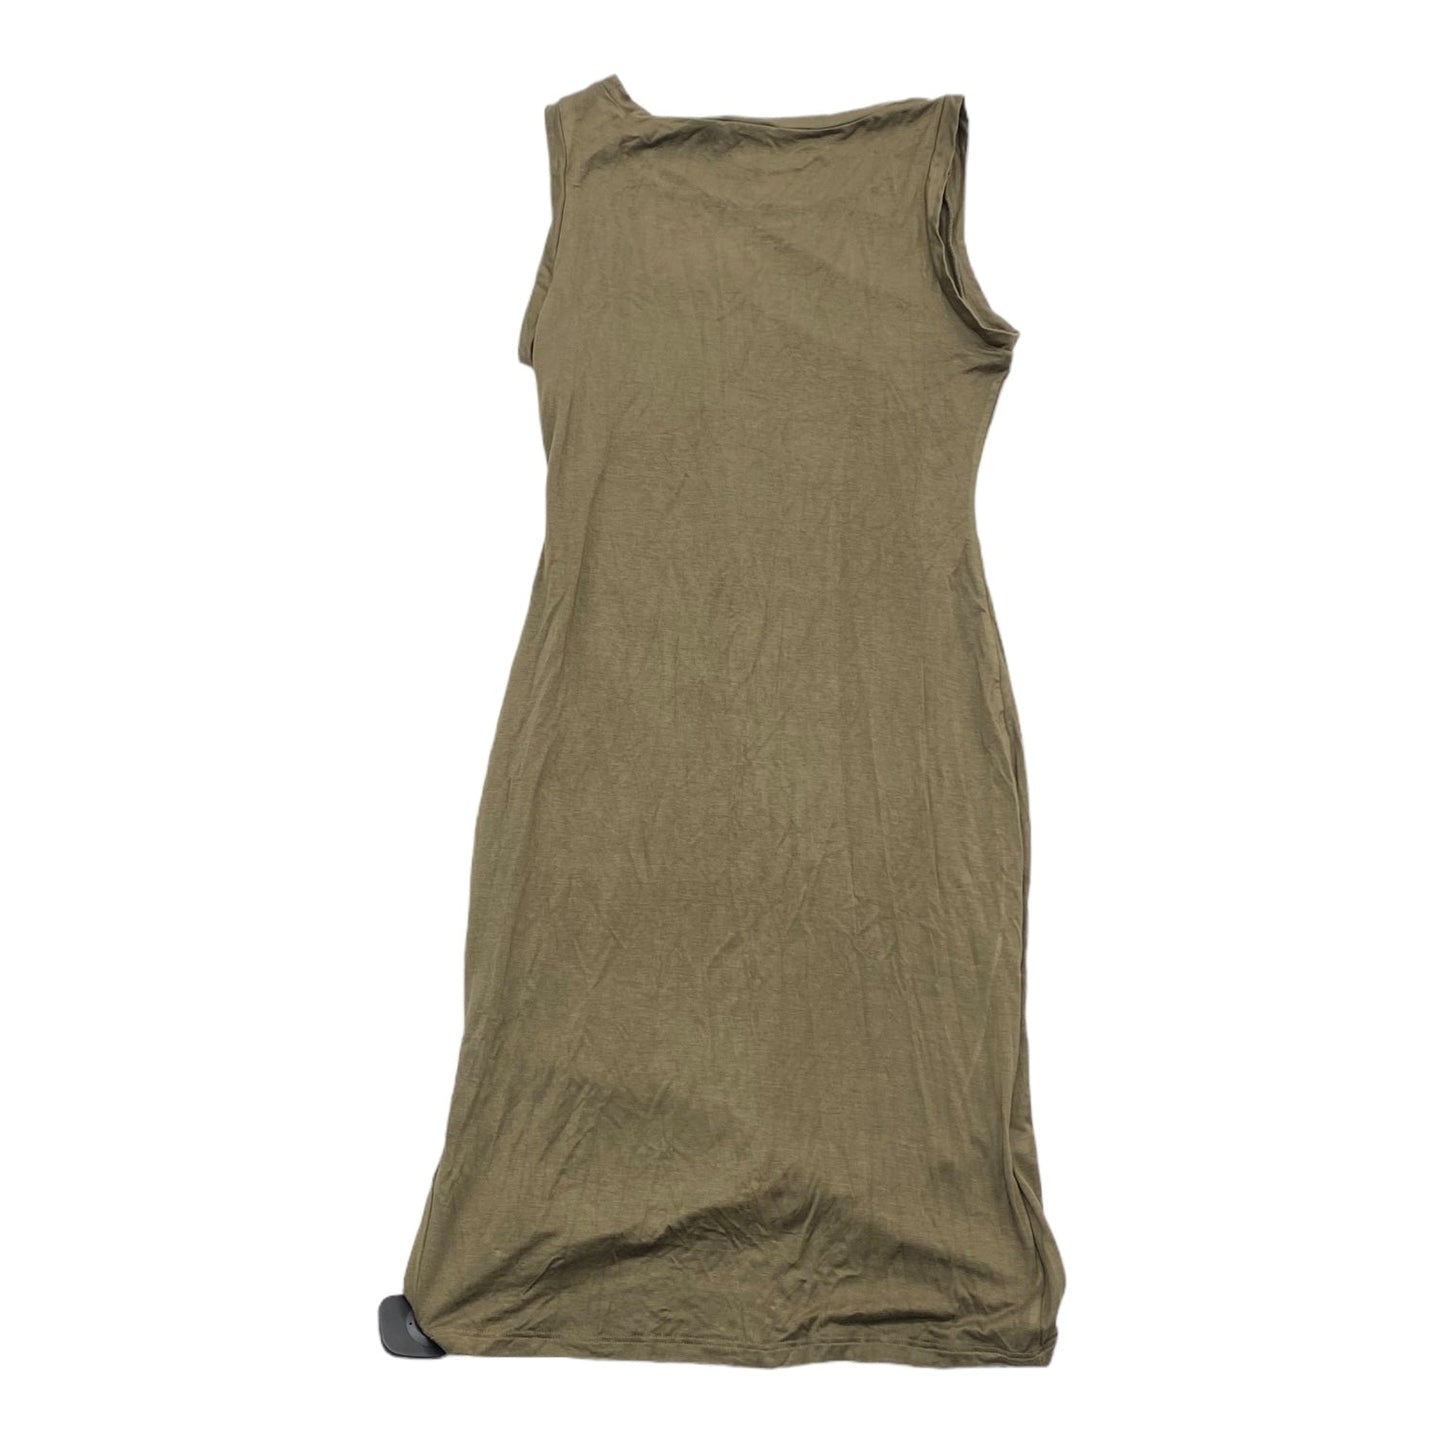 Dress Casual Midi By URBAN.DAIZY - NWT! MSRP $36 Size: M